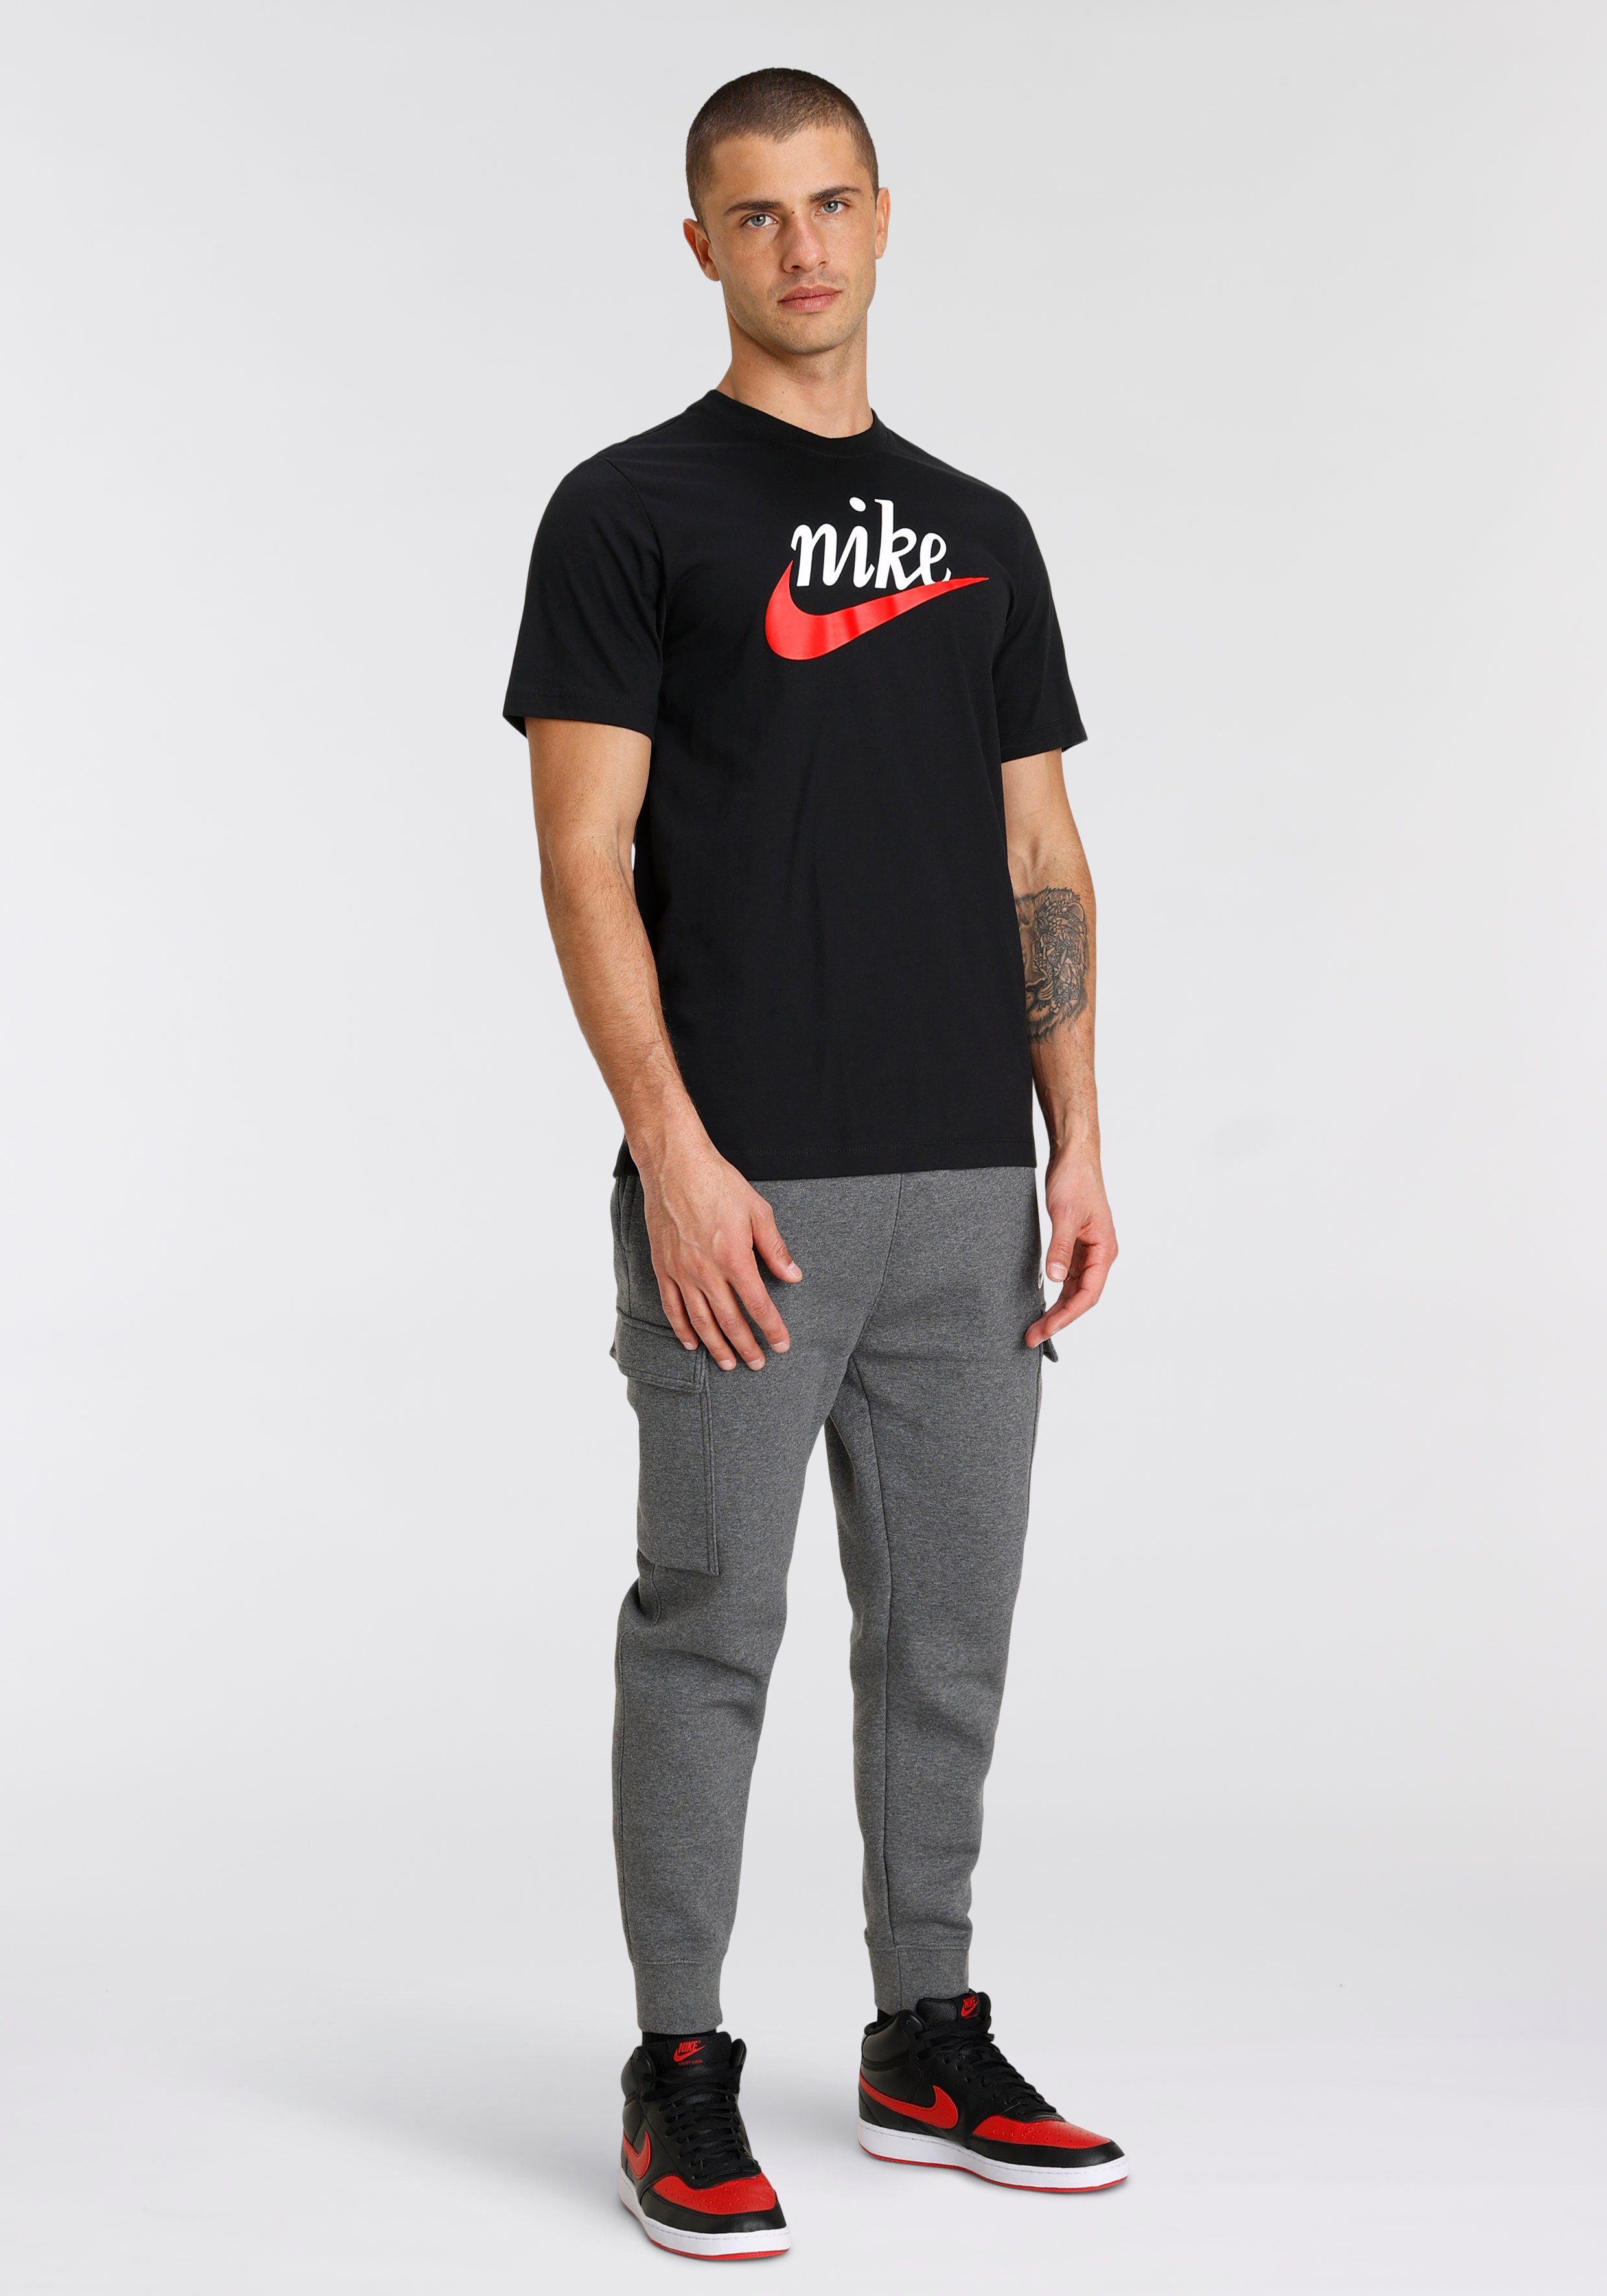 Nike Sportswear T-Shirt BLACK Men's T-Shirt